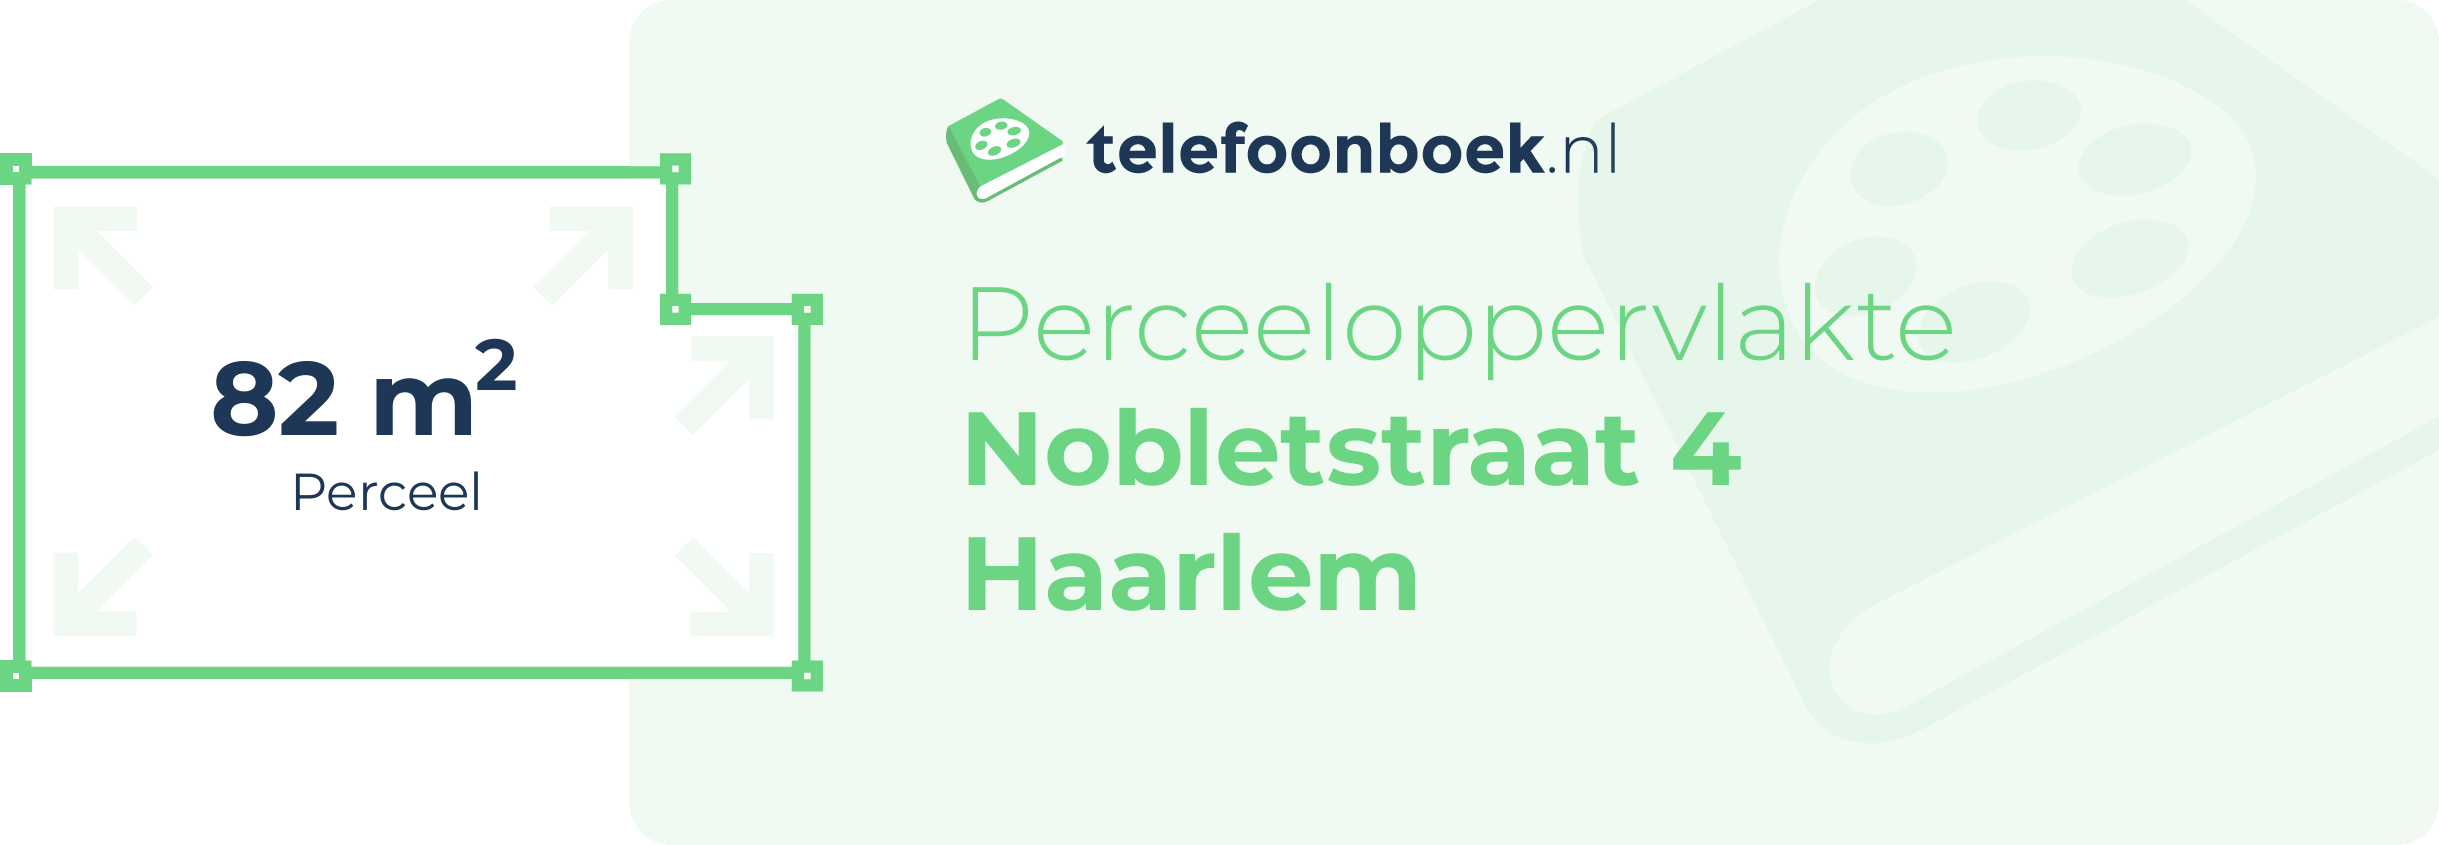 Perceeloppervlakte Nobletstraat 4 Haarlem